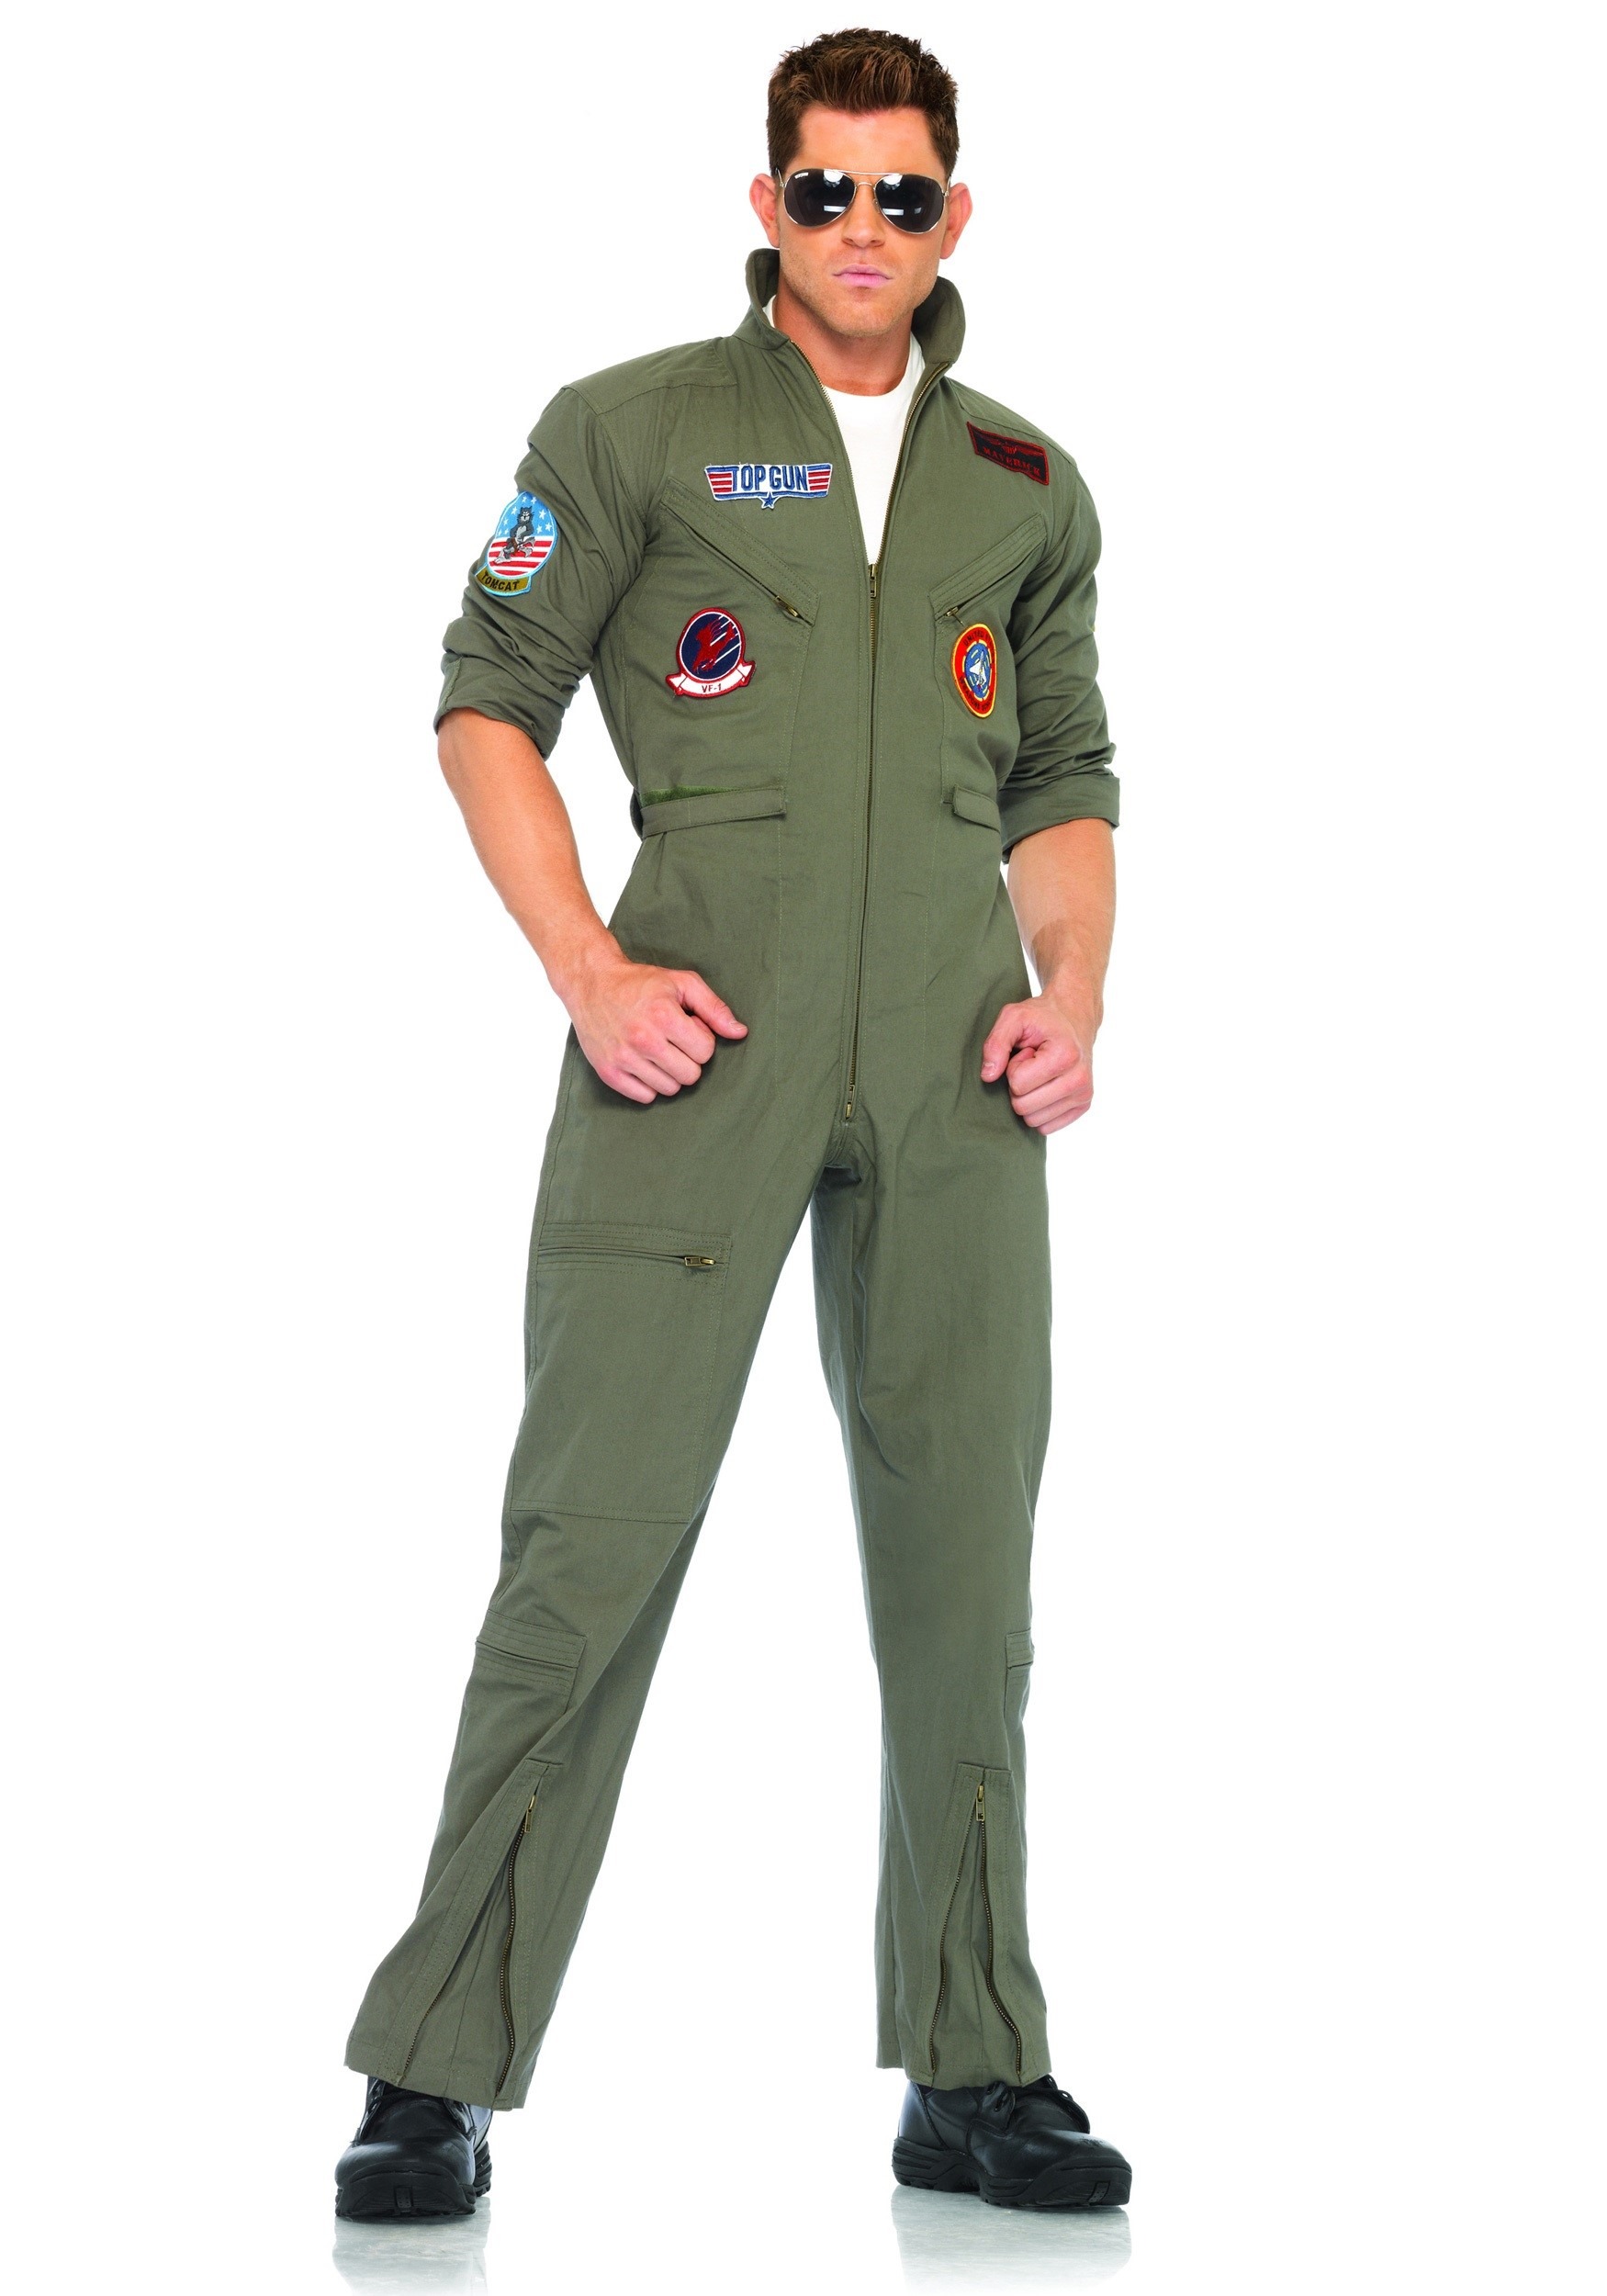 Image of Adult's Plus Size Top Gun Jumpsuit Costume | Fight Pilot Costume ID LETG83702X-3X